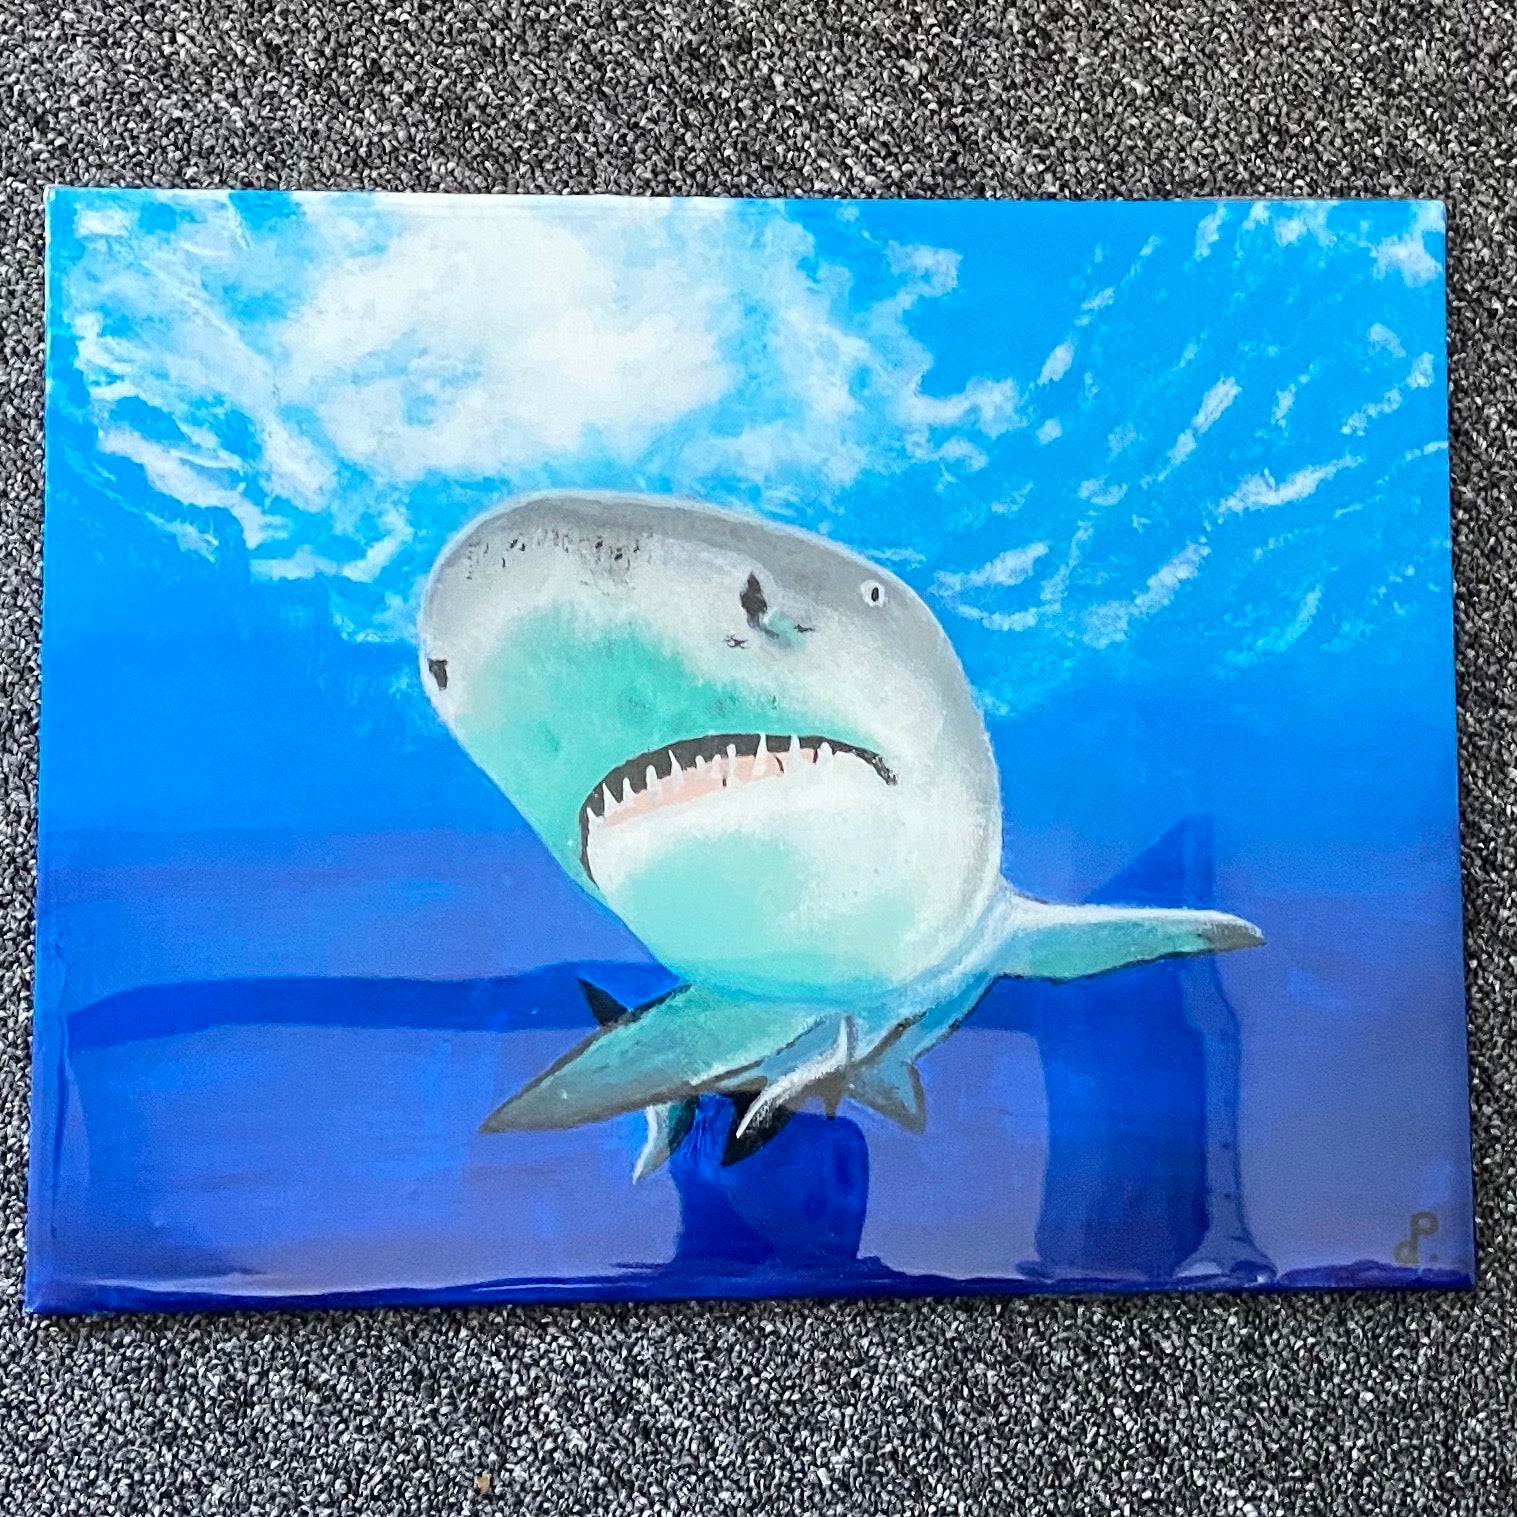 Lemon Shark painting by D Pontvieux full view